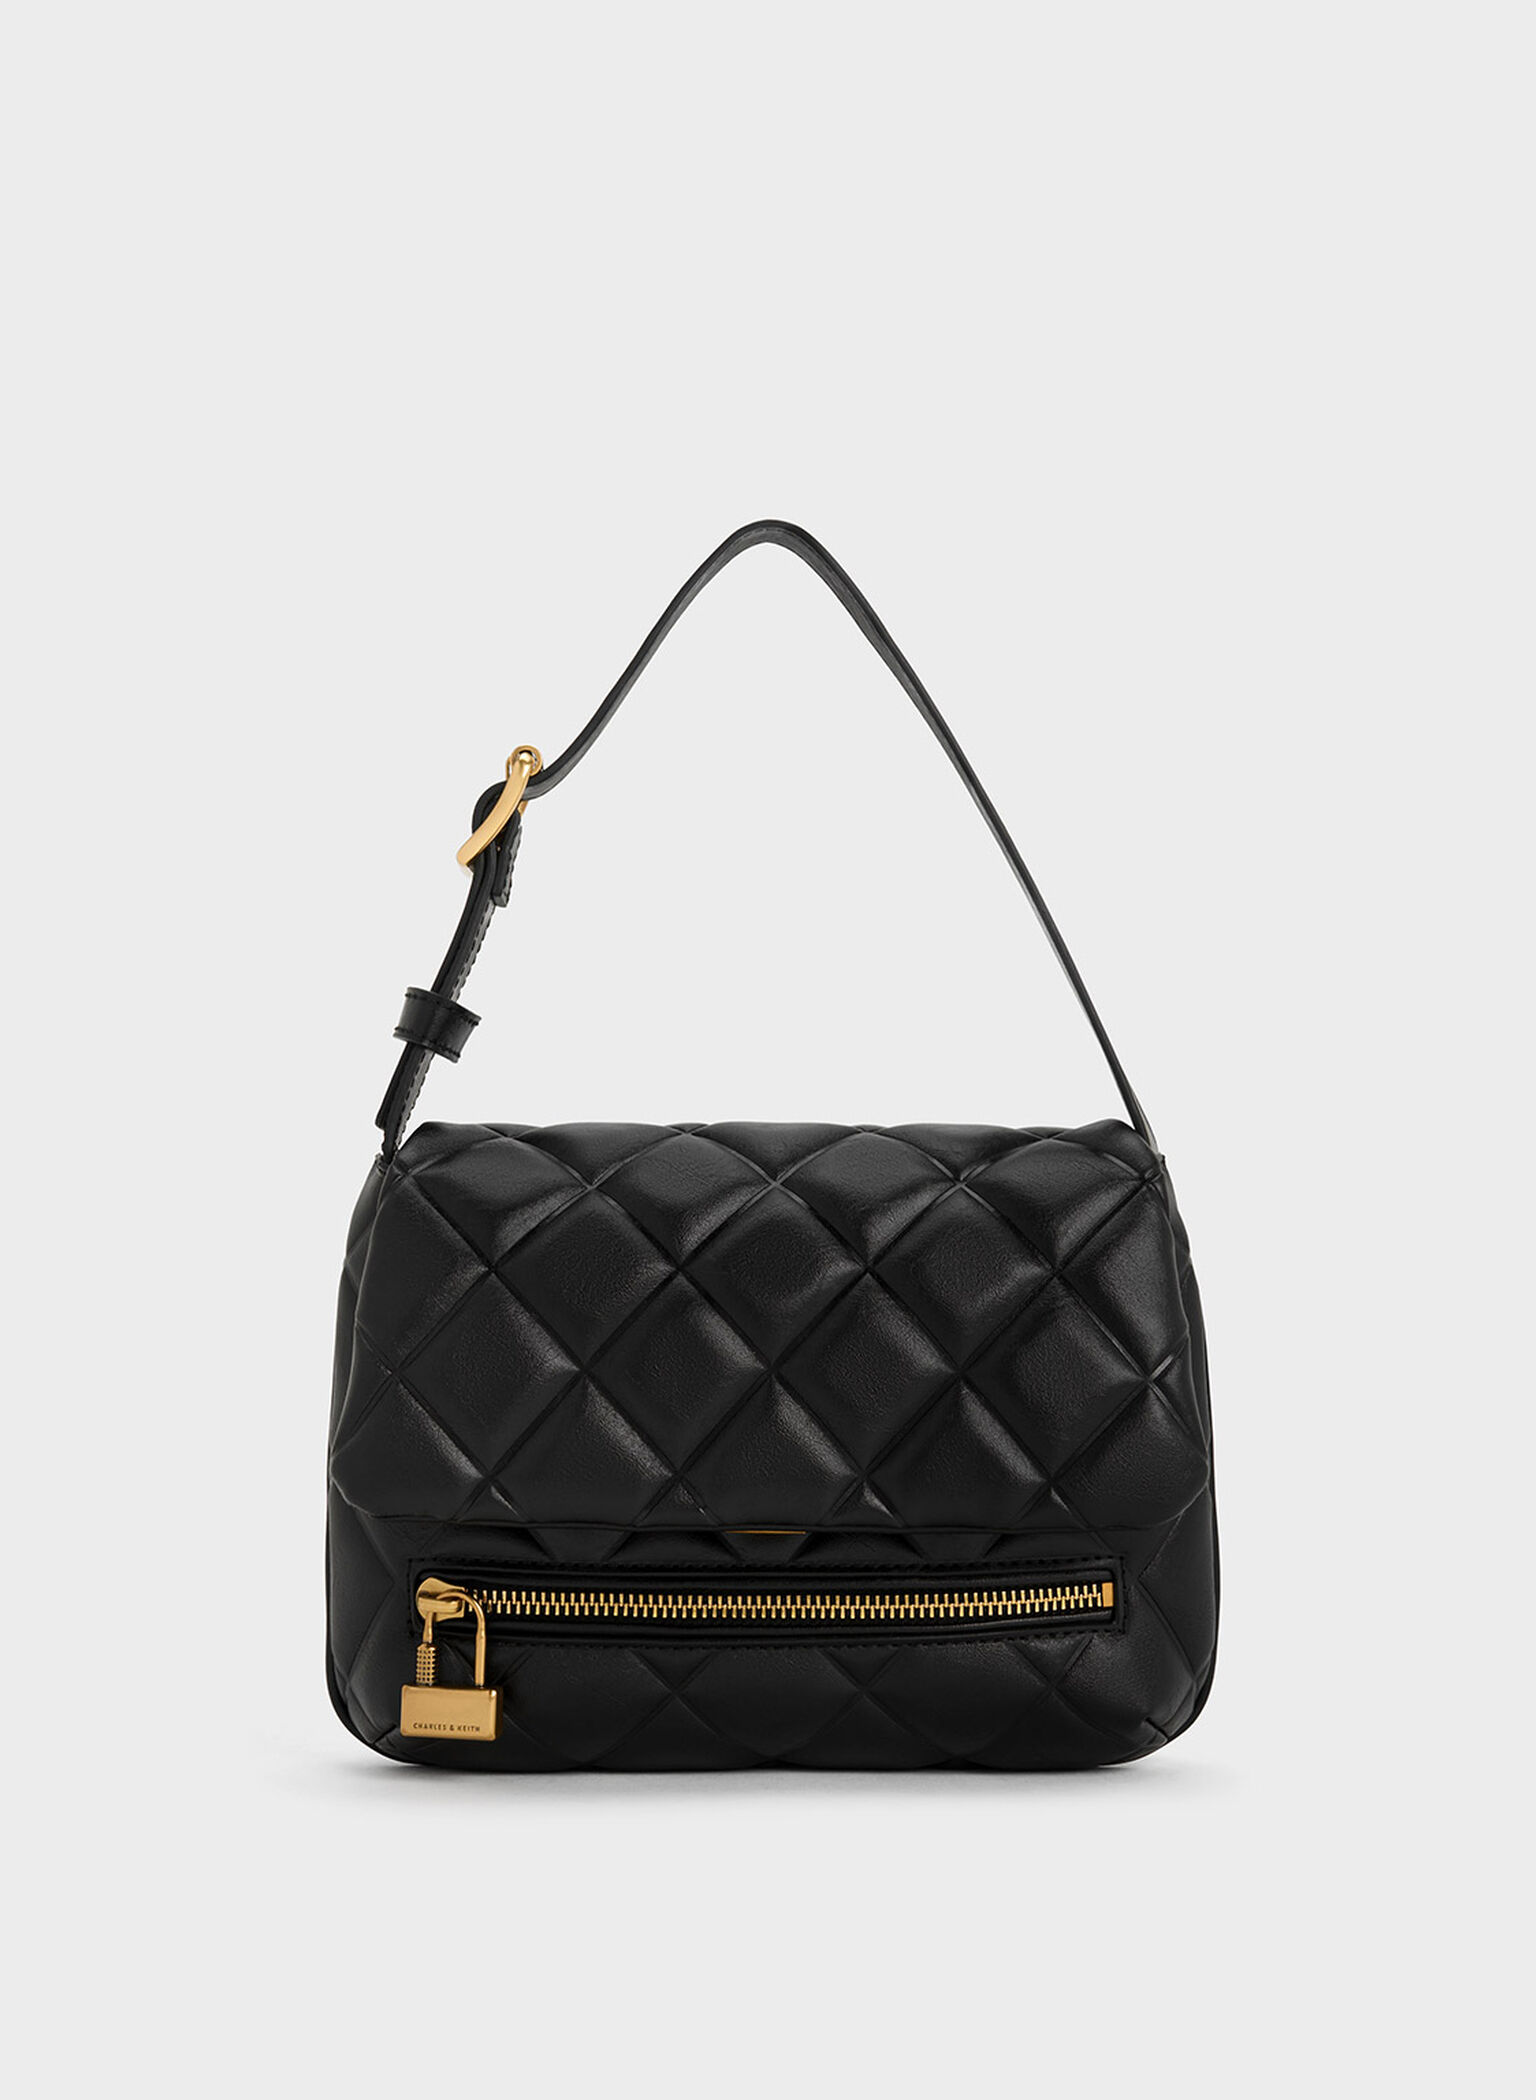 Chanel Vintage Black Lambskin Round CC Bag Gold Hardware, 1986